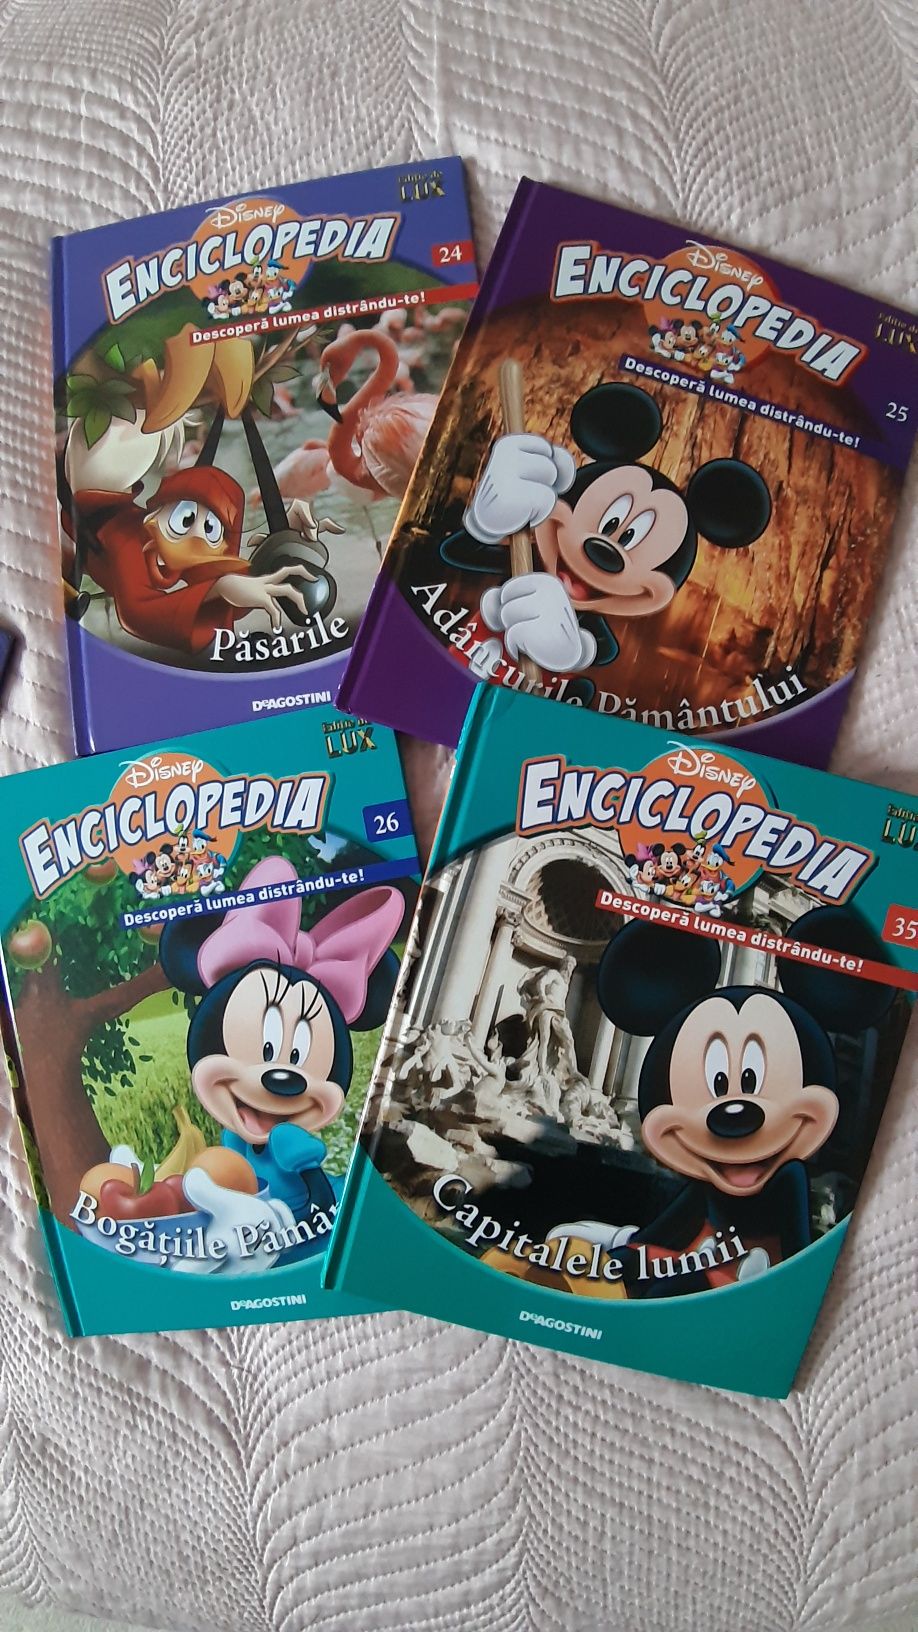 Enciclopedia Disney de Agostini